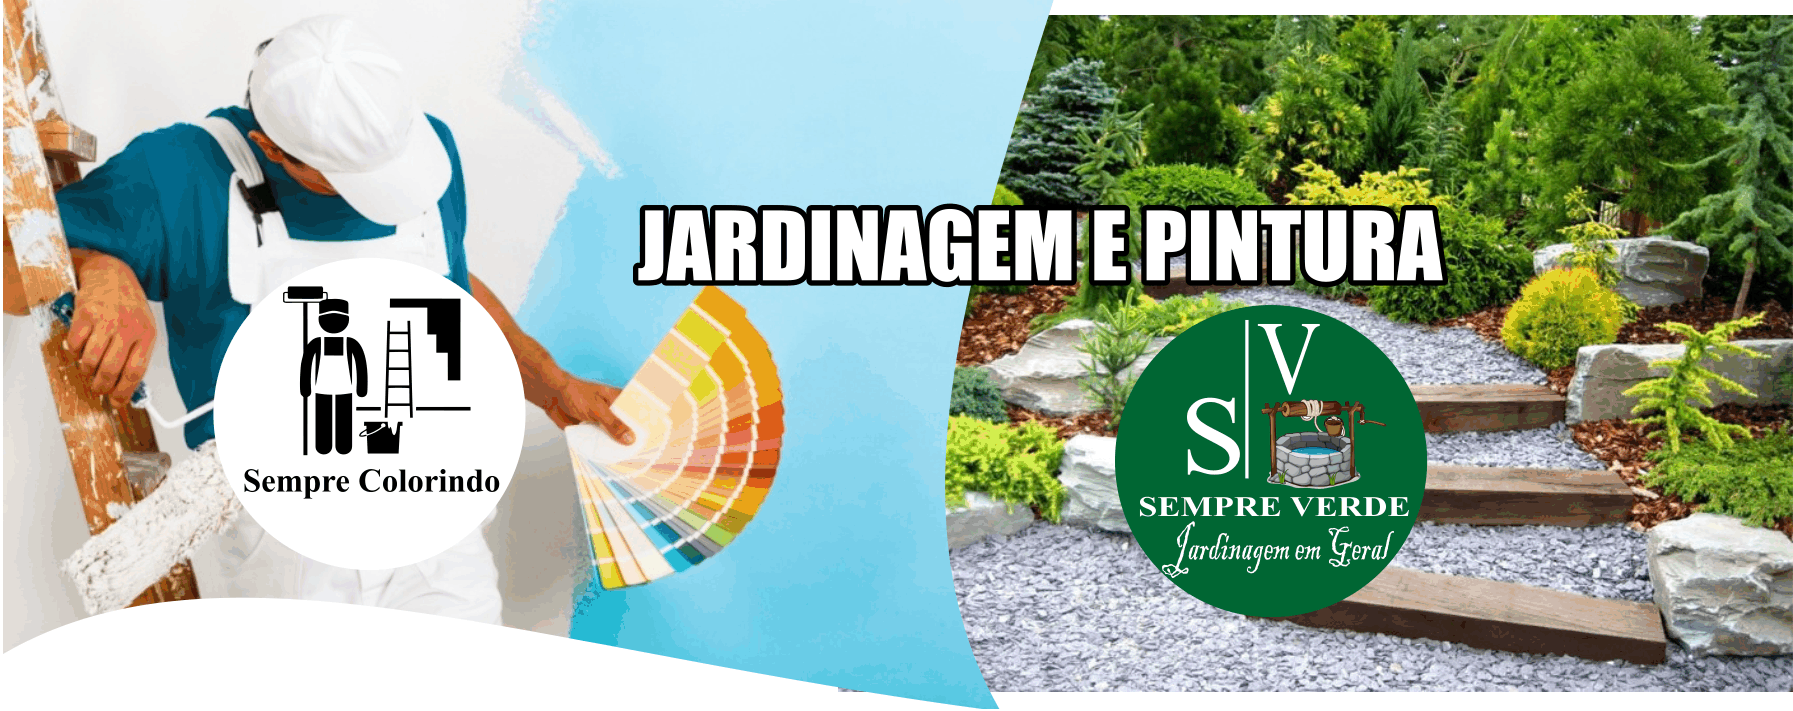 Jardinagem e Pintura      Fones: (41) 3079-9883 / (41) 99758-8774